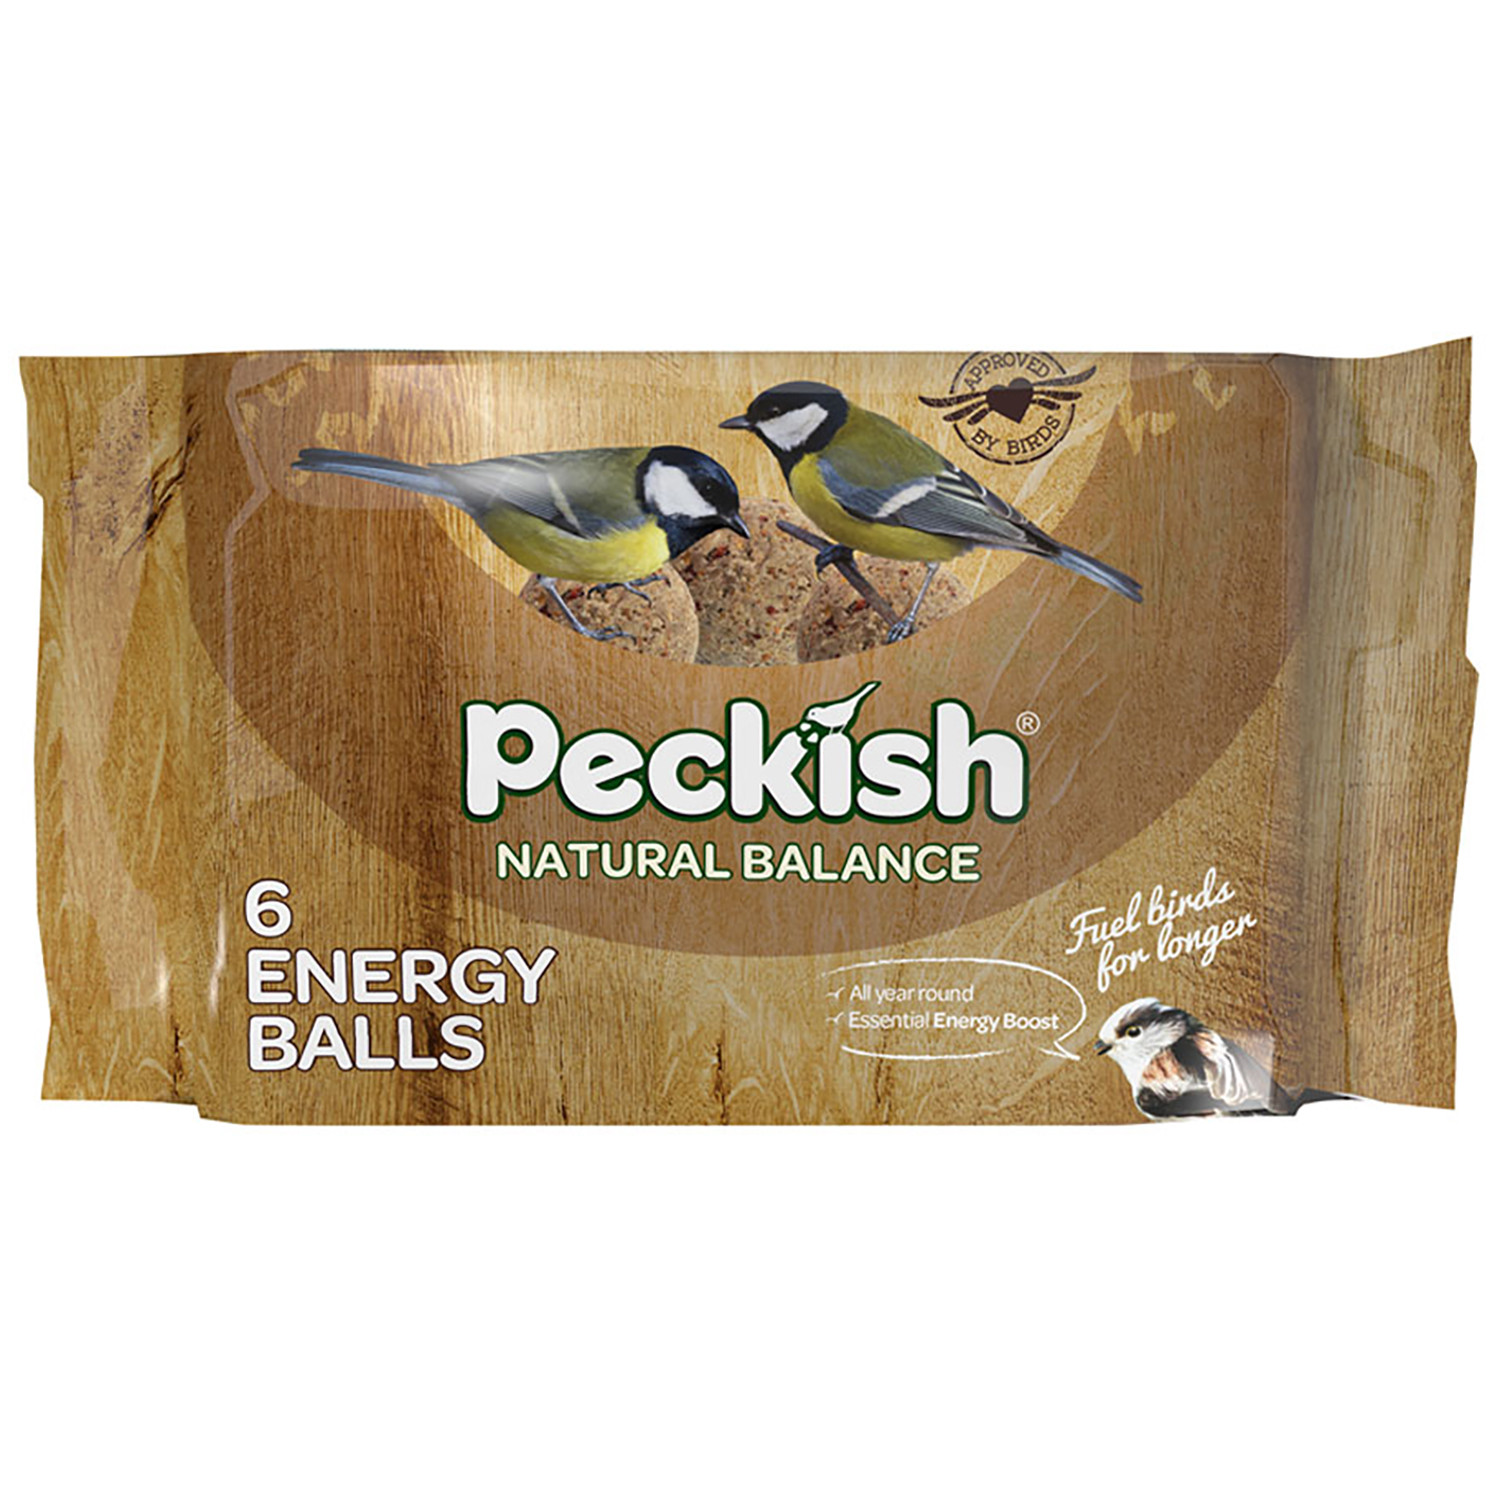 Peckish Natural Balance Energy Balls 6 Pack Image 1